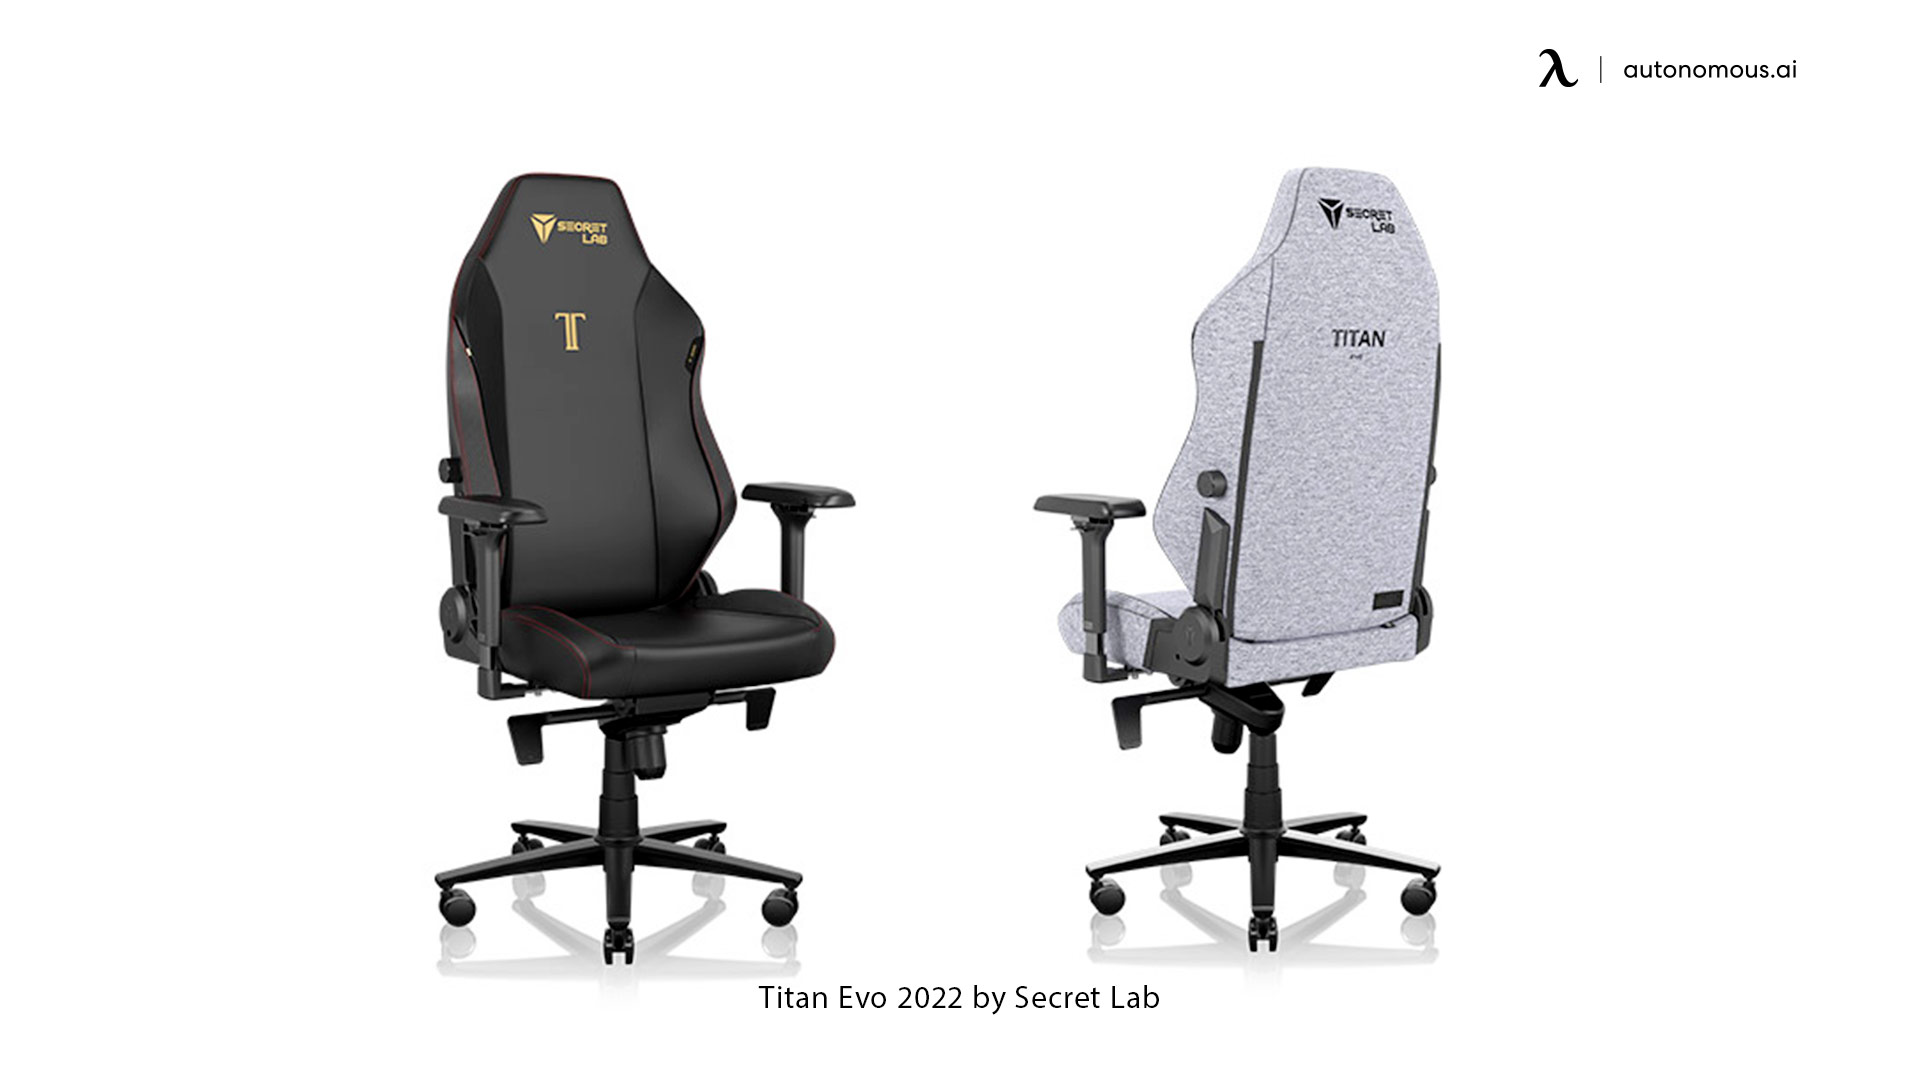 Secretlab Titan Evo 2022 ergonomic gaming chair